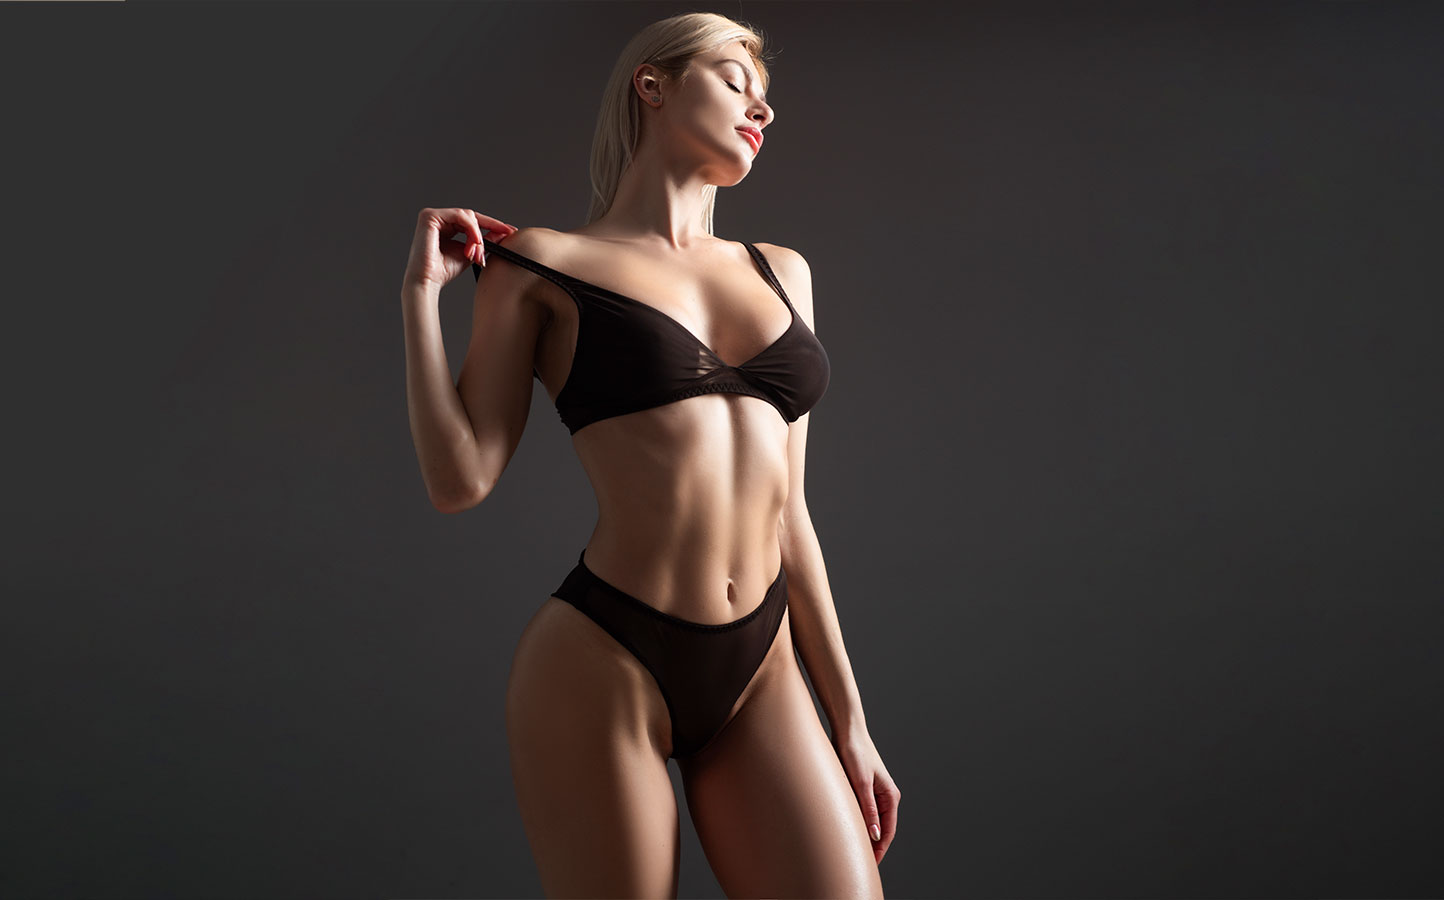 Fit woman in black undergarments taking off bra strap